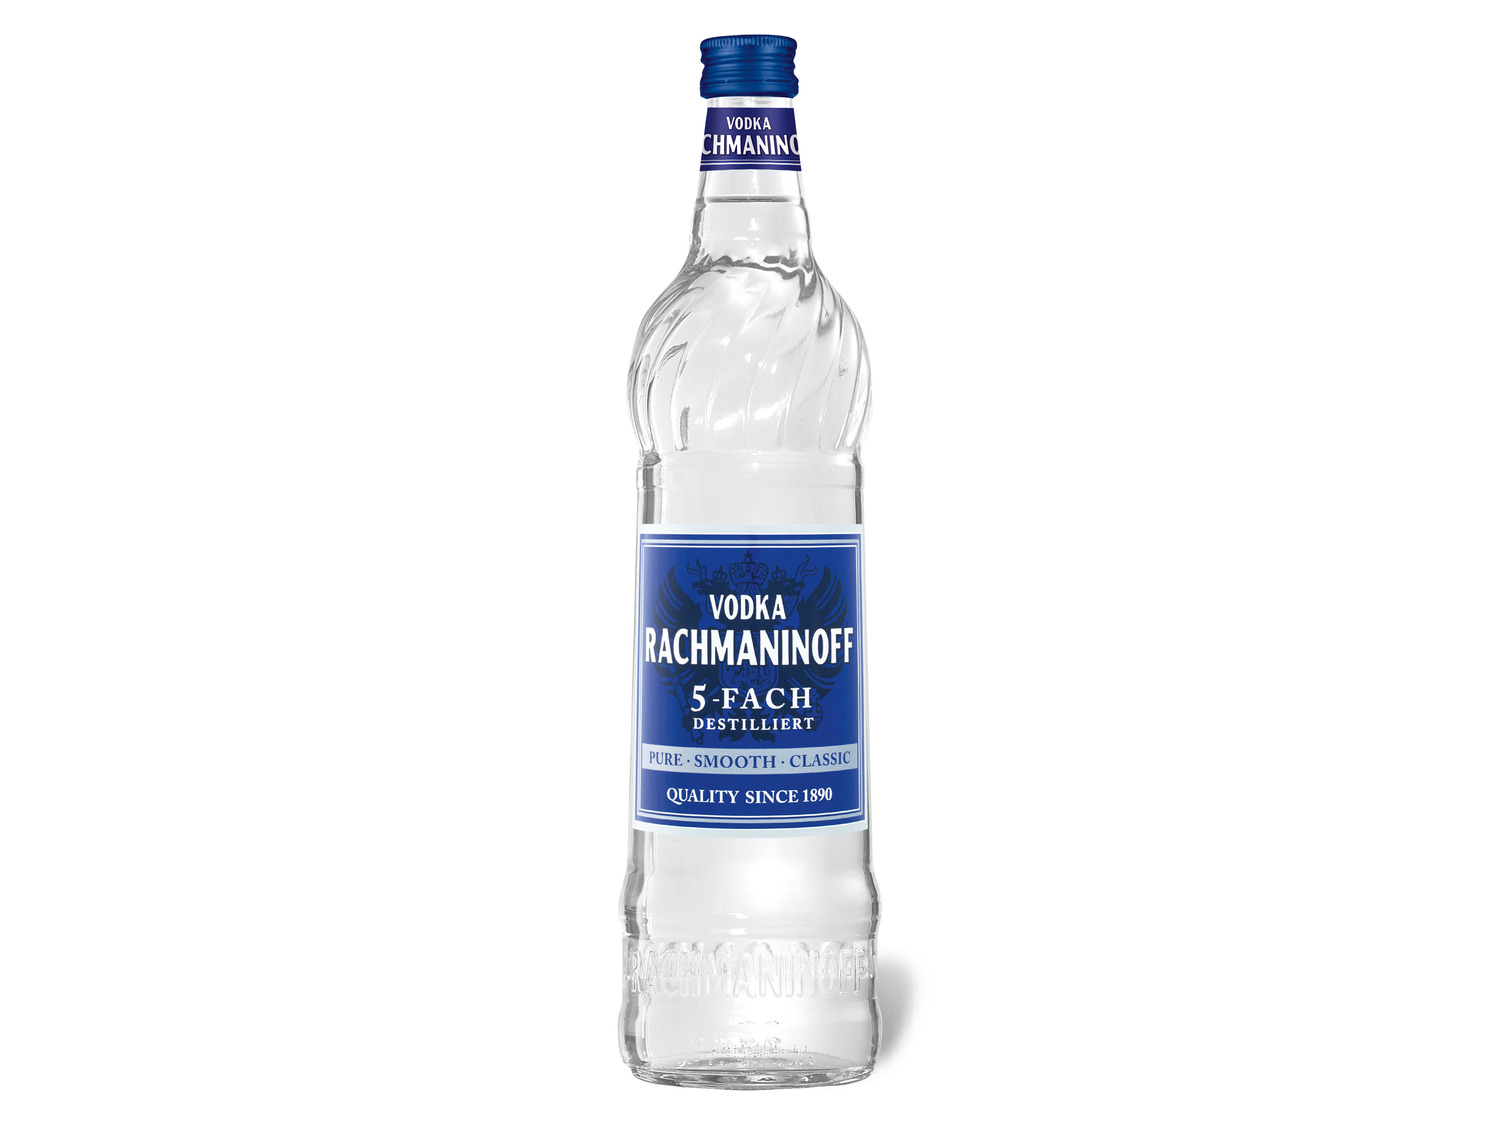 RACHMANINOFF Wodka 5-fach destilliert Vol 40% | LIDL